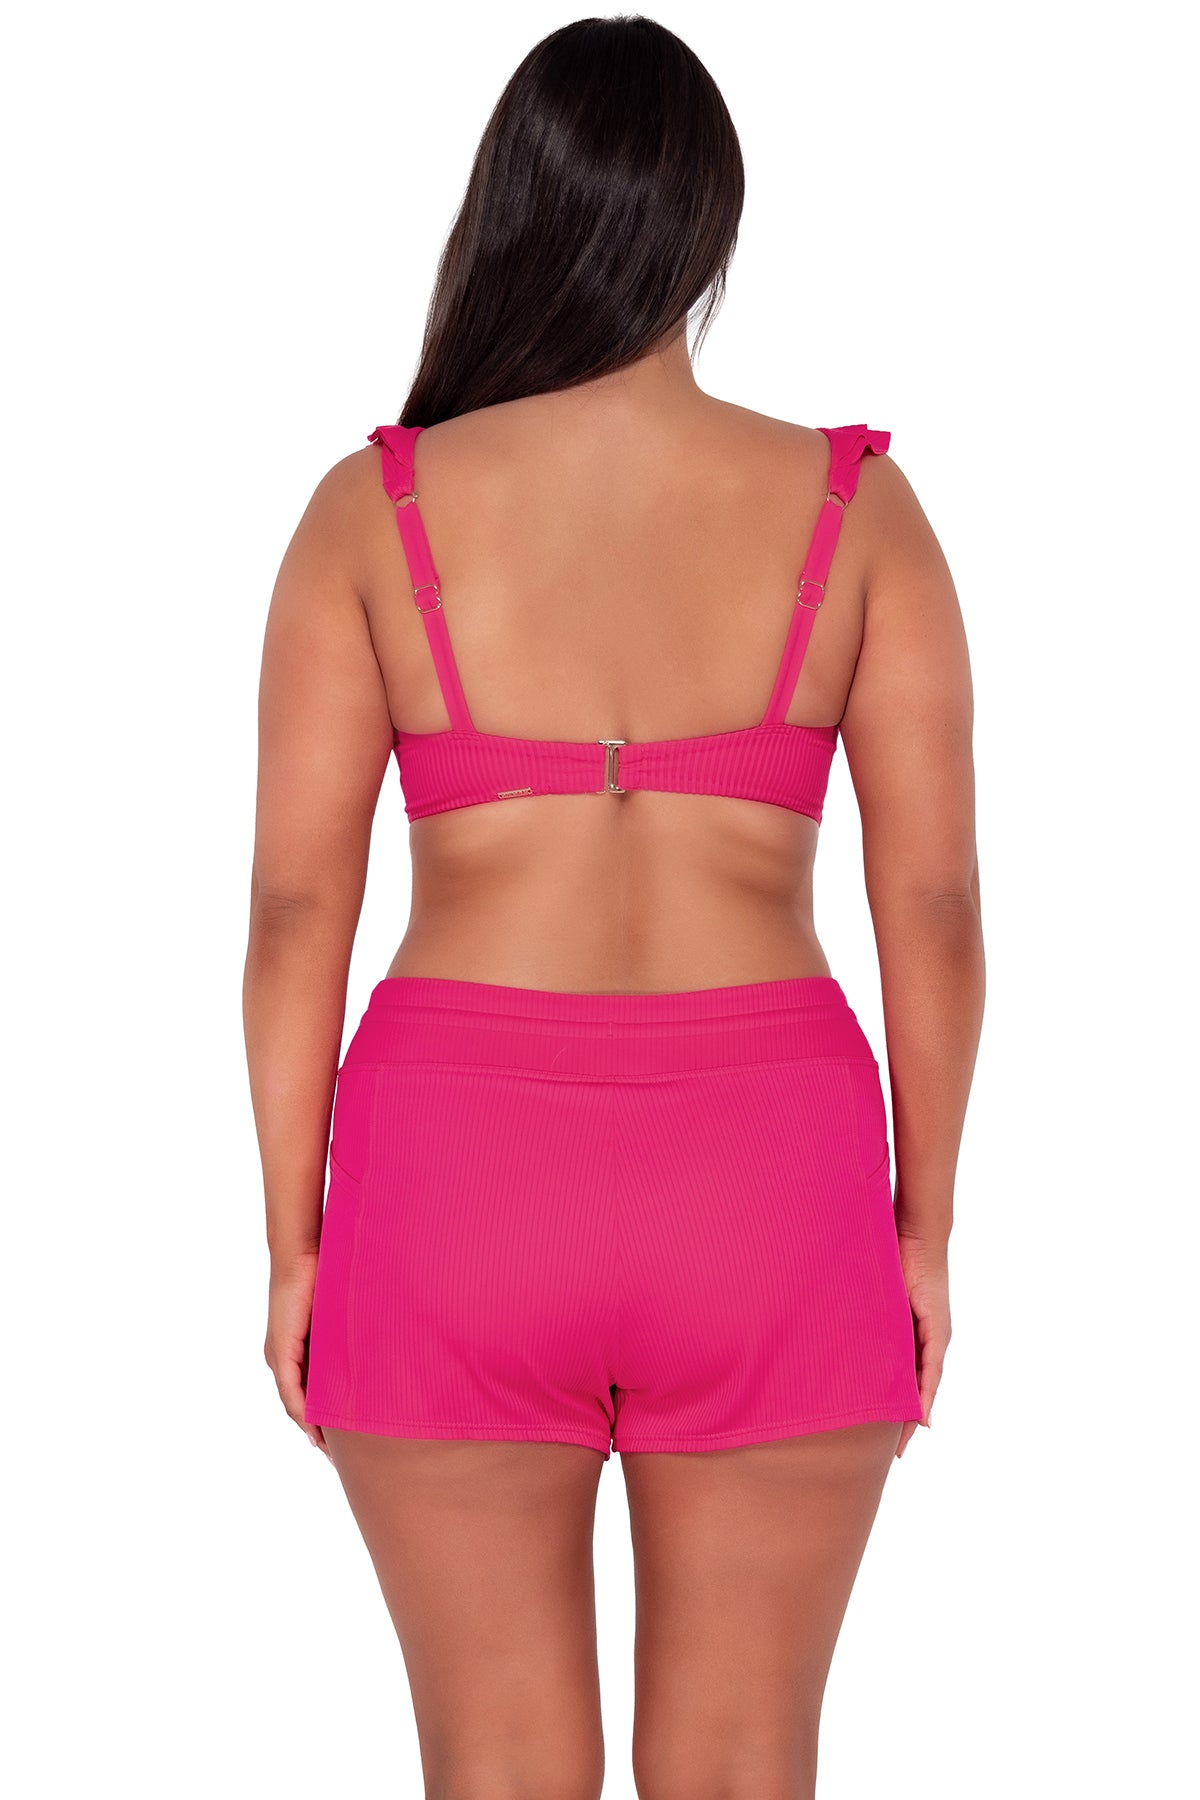 Back pose #1 of Nicki wearing Sunsets Begonia Sandbar Rib Willa Wireless Top paired with Laguna Swim Short women's casual wear